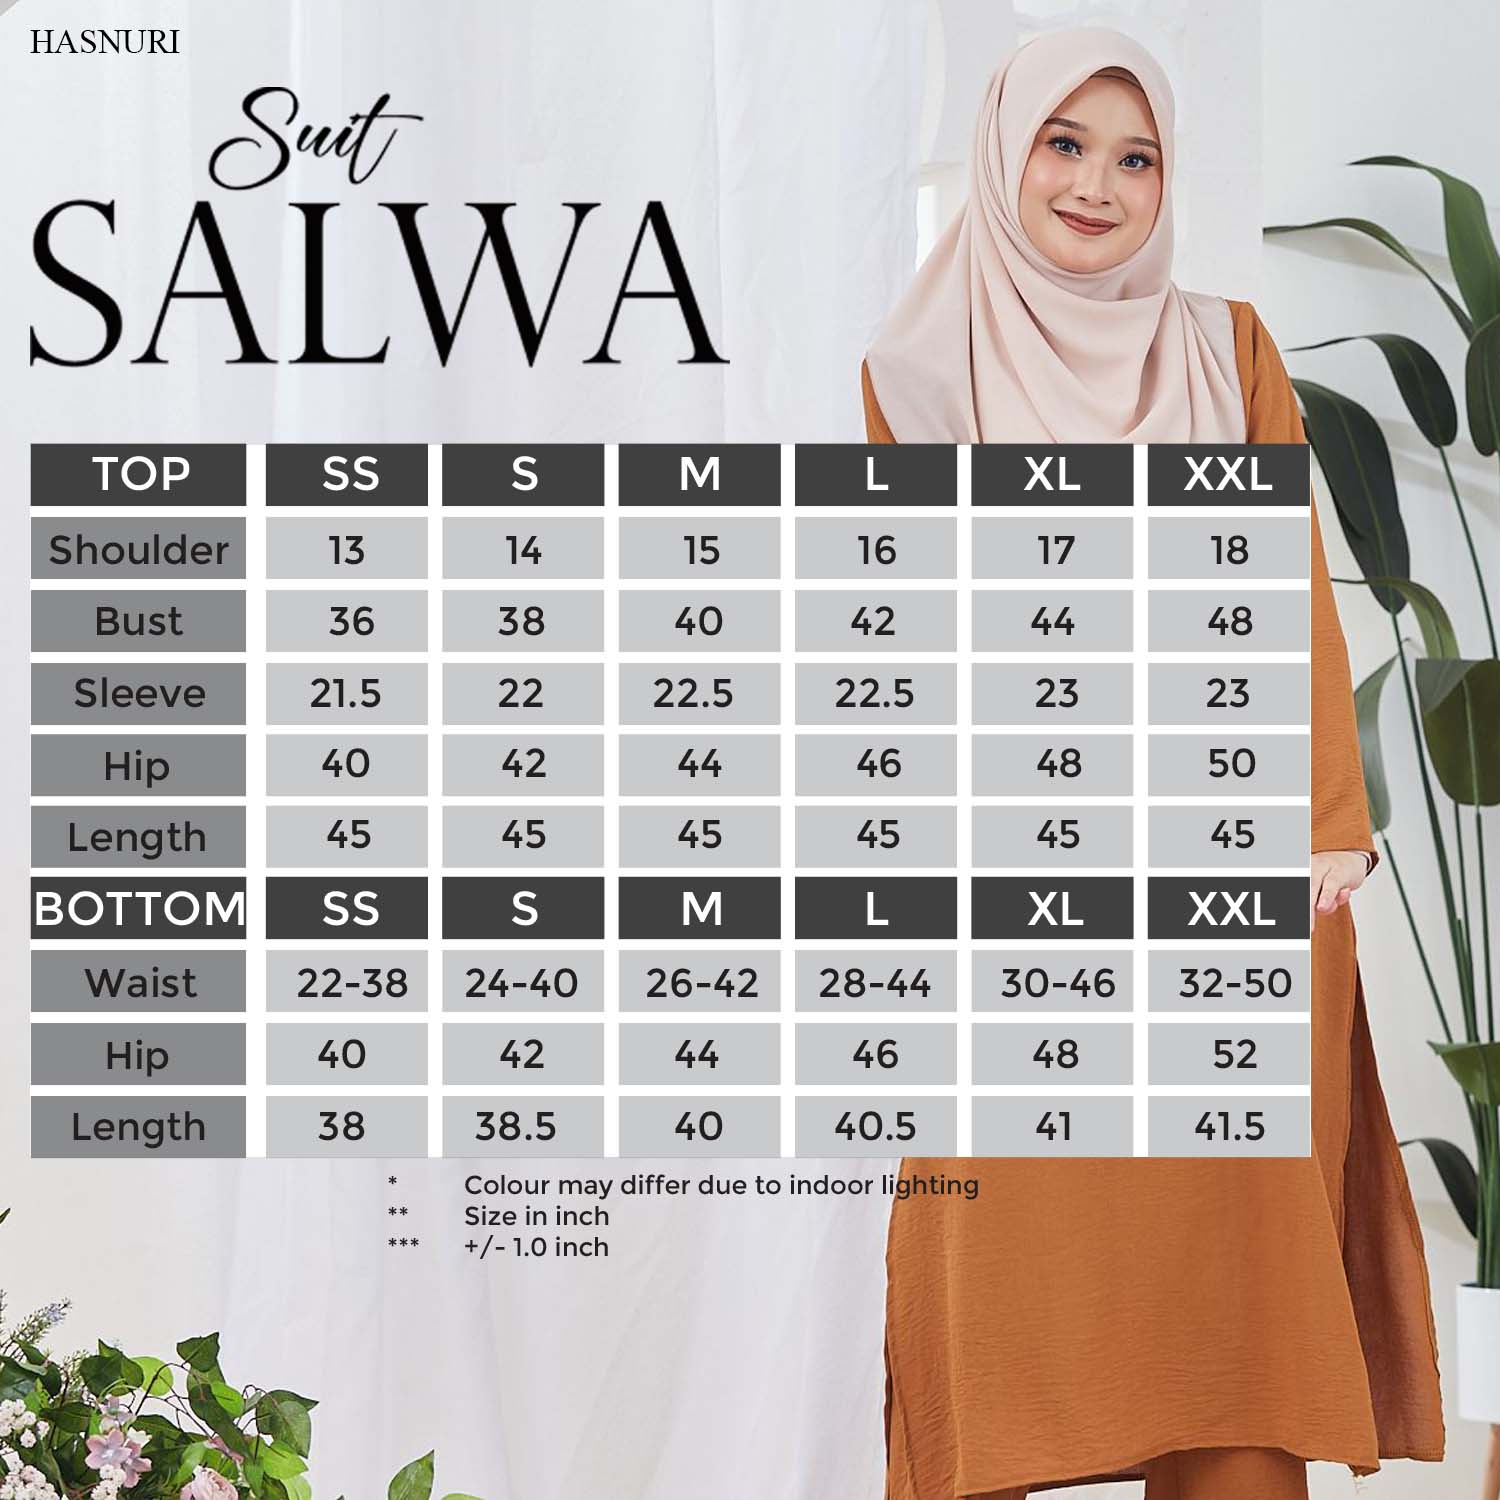 Suit Salwa - Gold